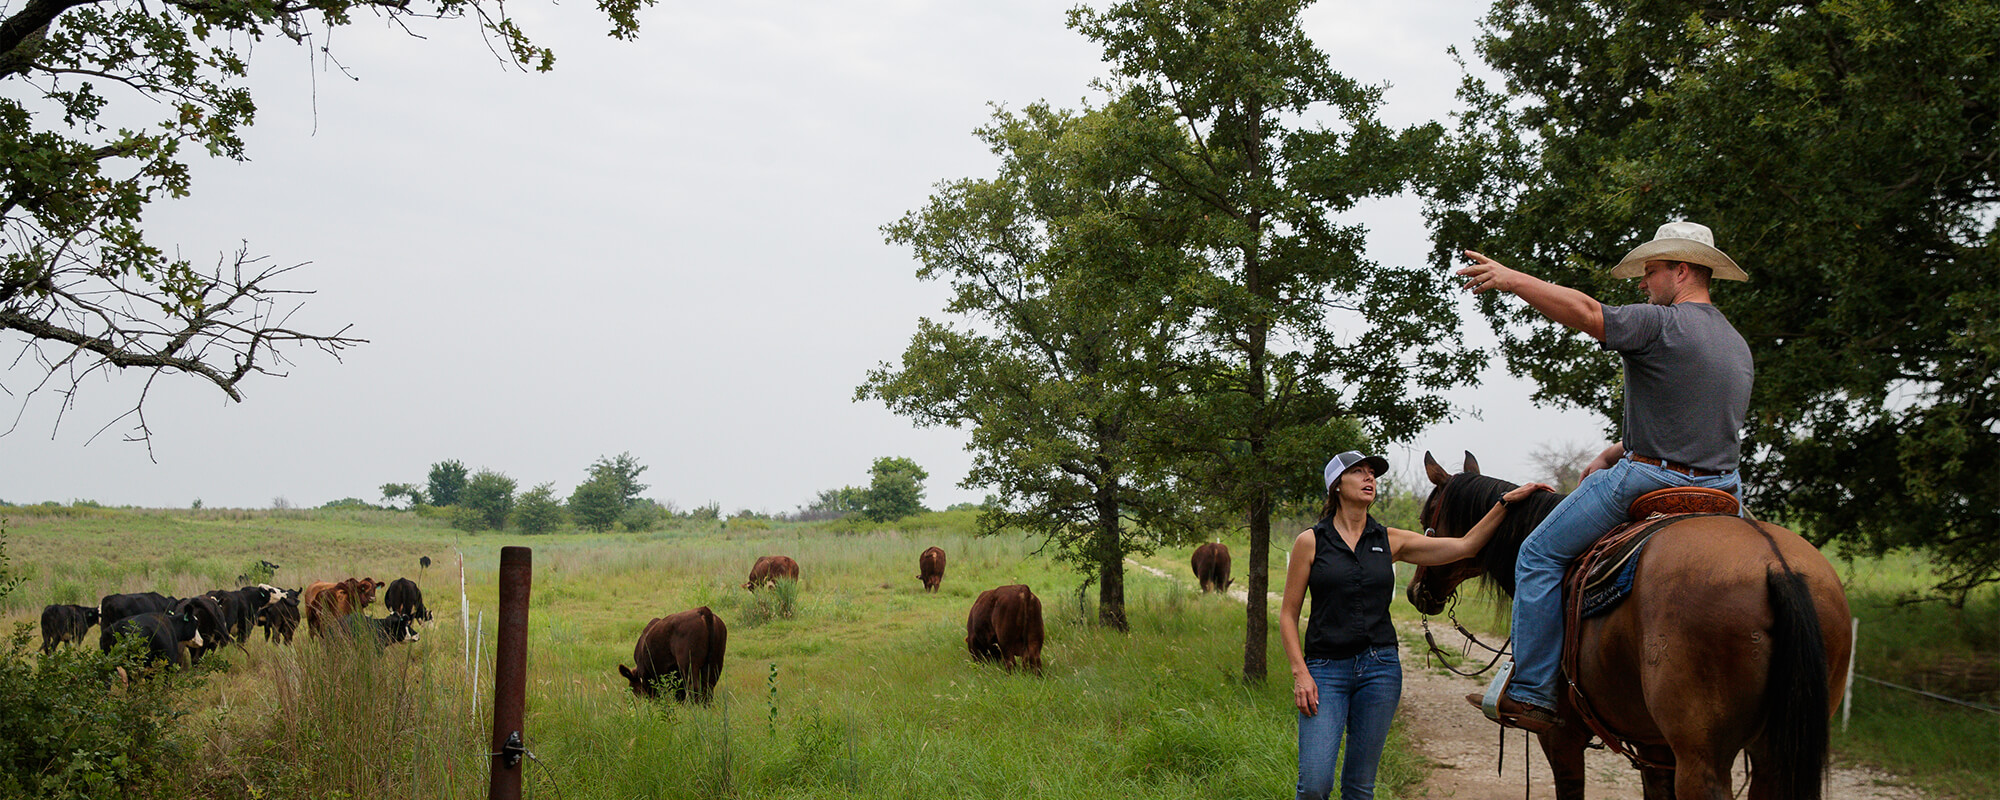 Ranch team talking in the field. Clark Roberts, on horseback, speaks with Caitlin Hebb